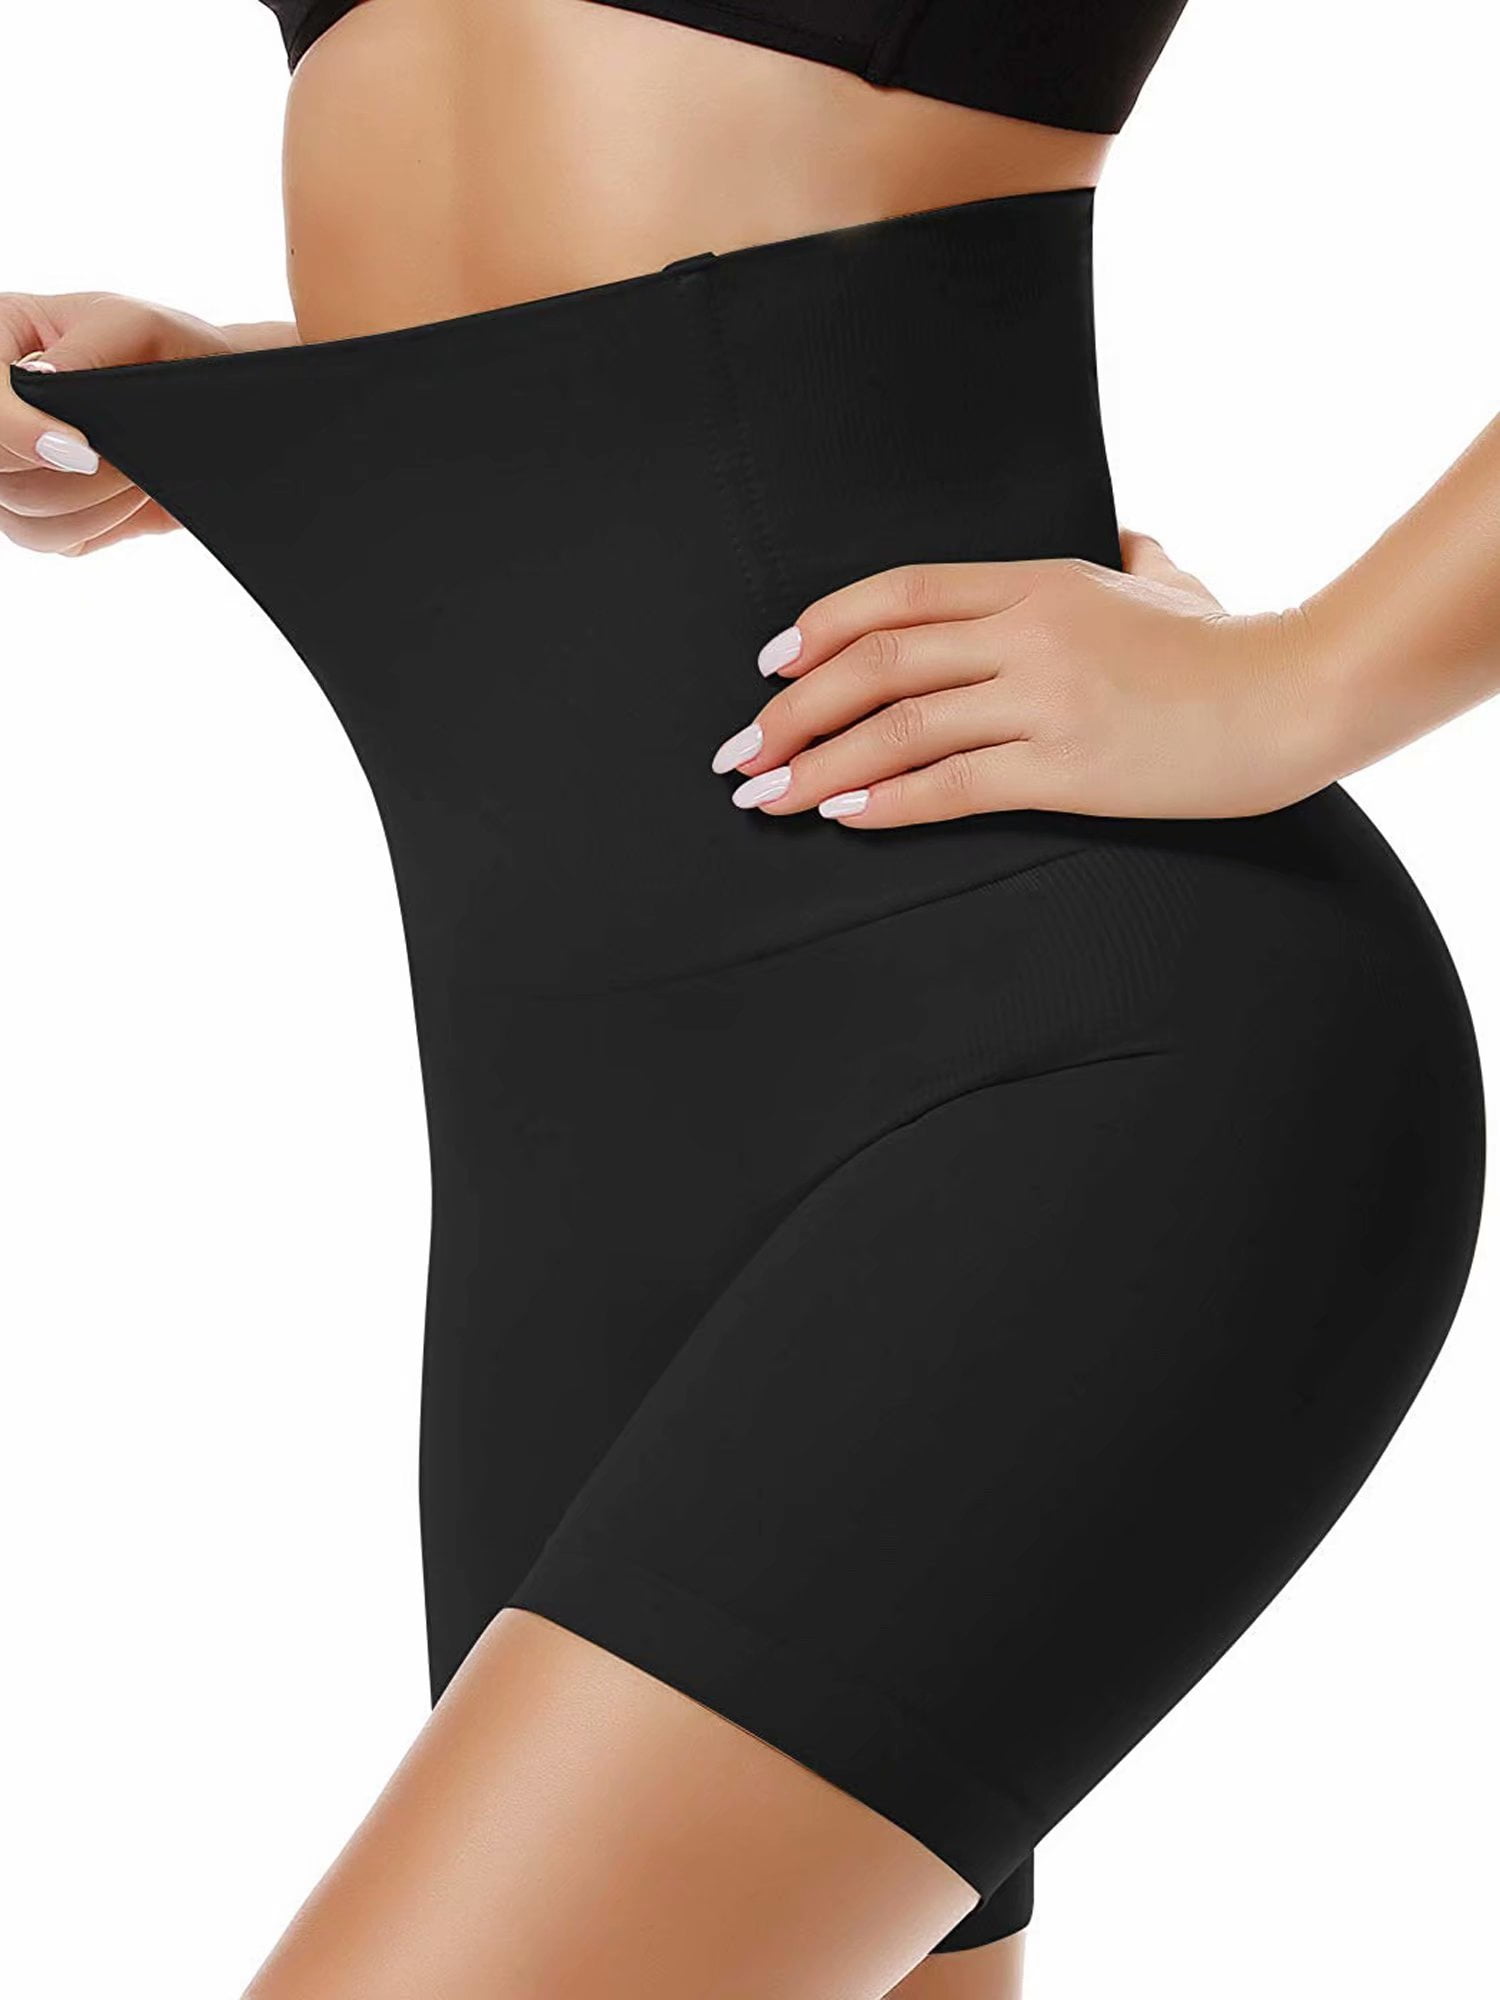 Ausom Womens Lace High Waist Body Shaper Pants Control Slim Tummy Shapewear Thigh Slimmer Shorts 